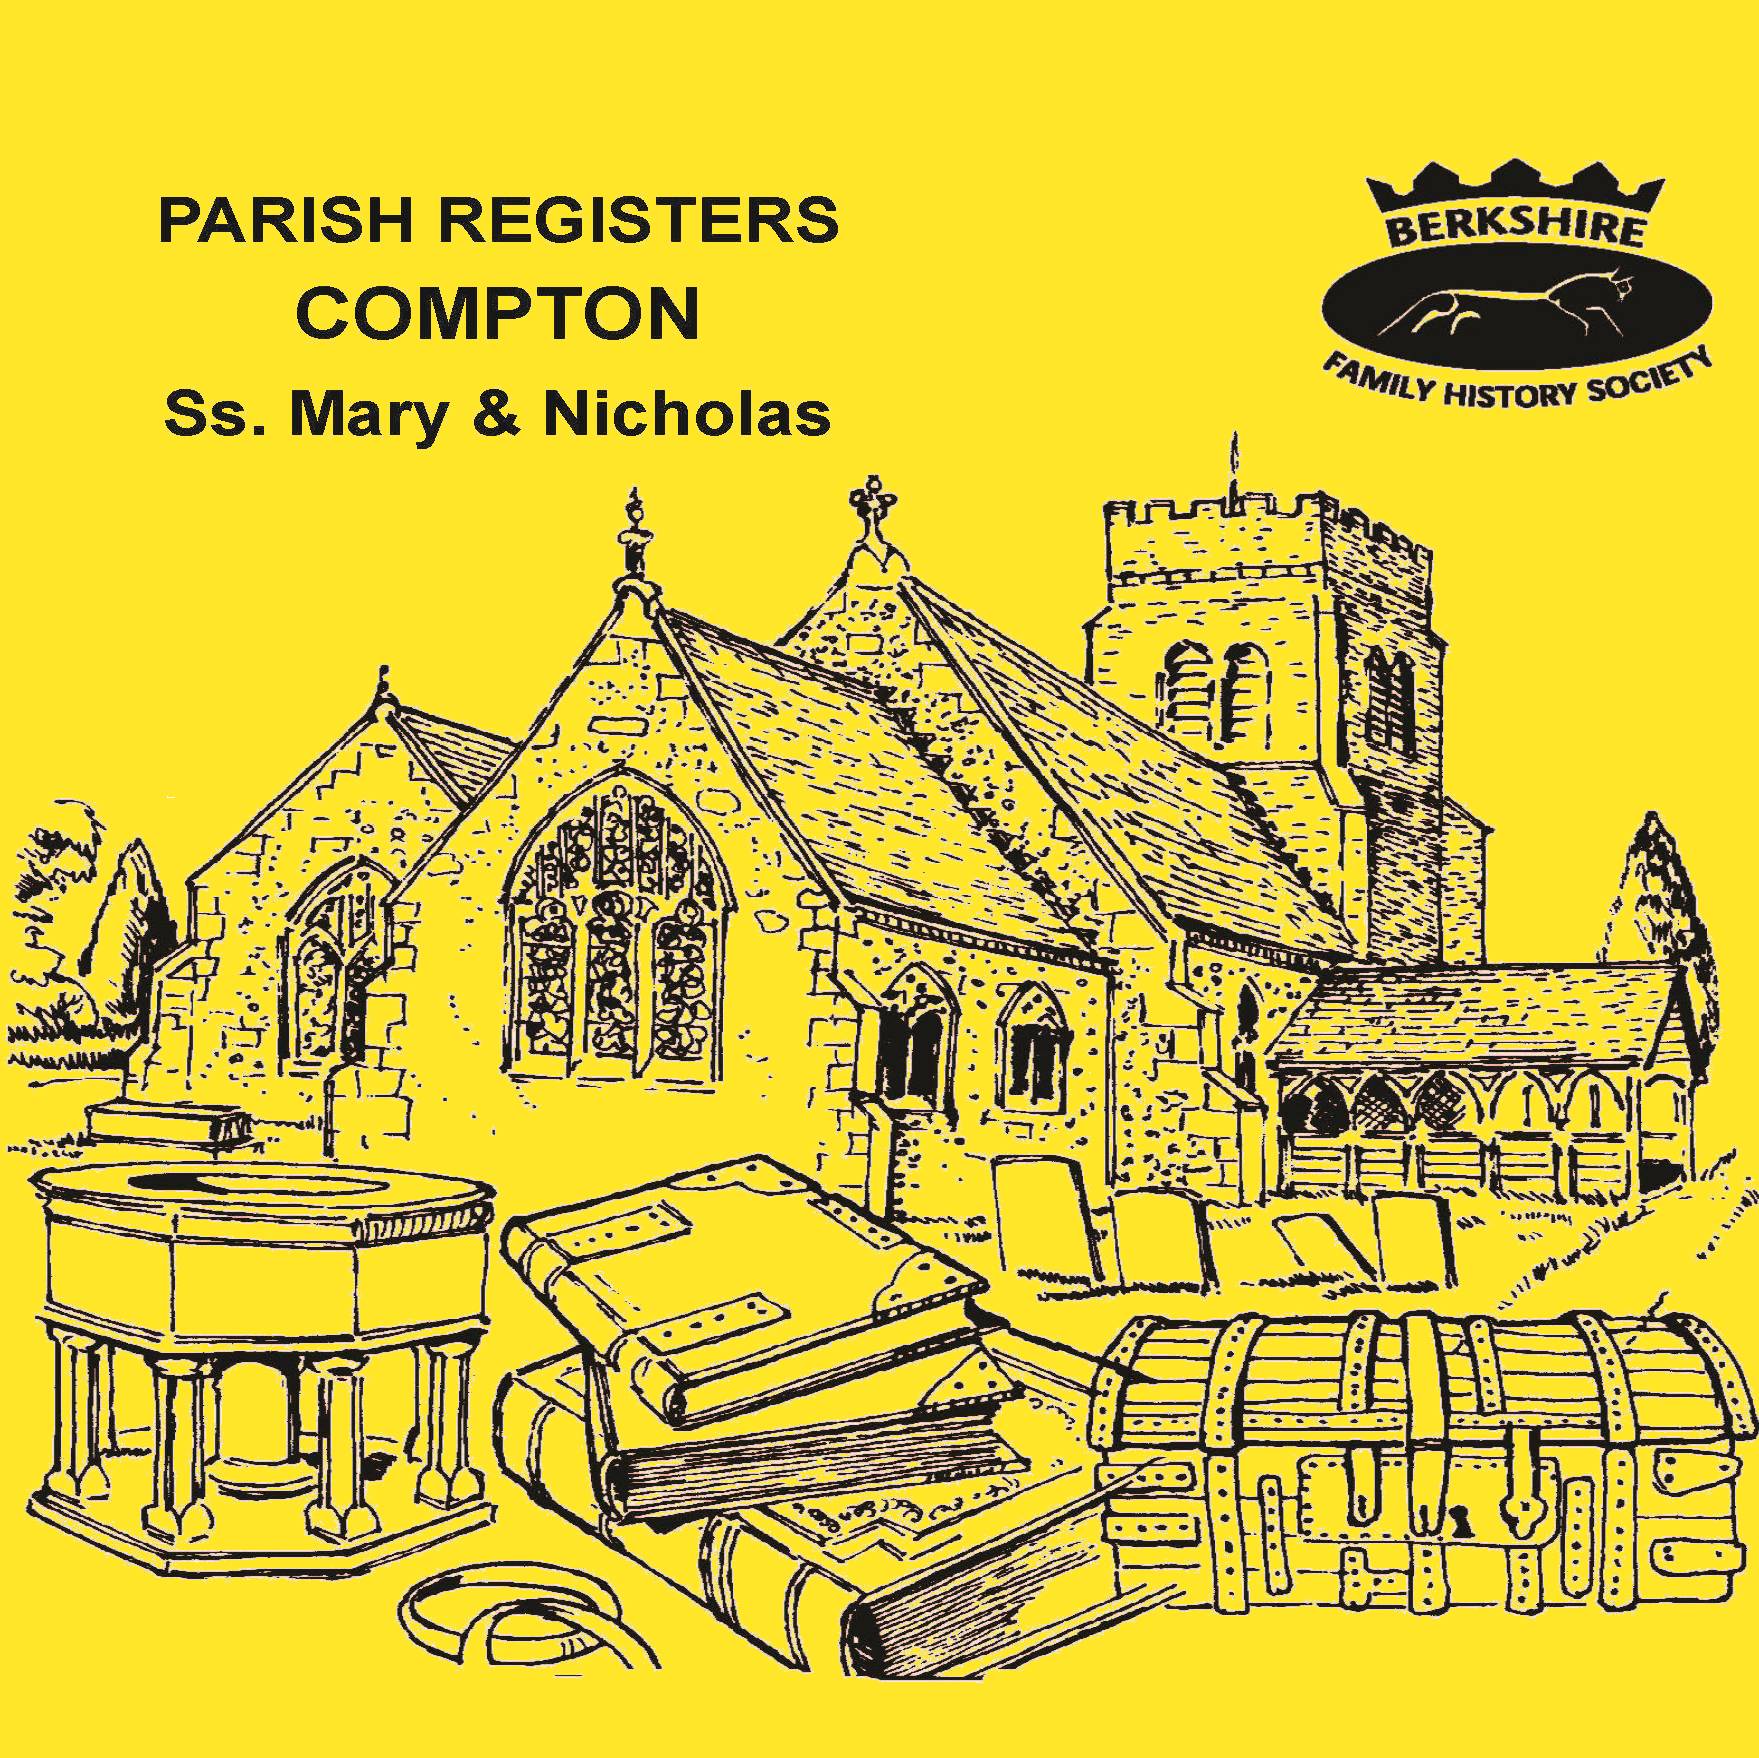 Compton, Ss. Mary & Nicholas, Parish Registers (CD)